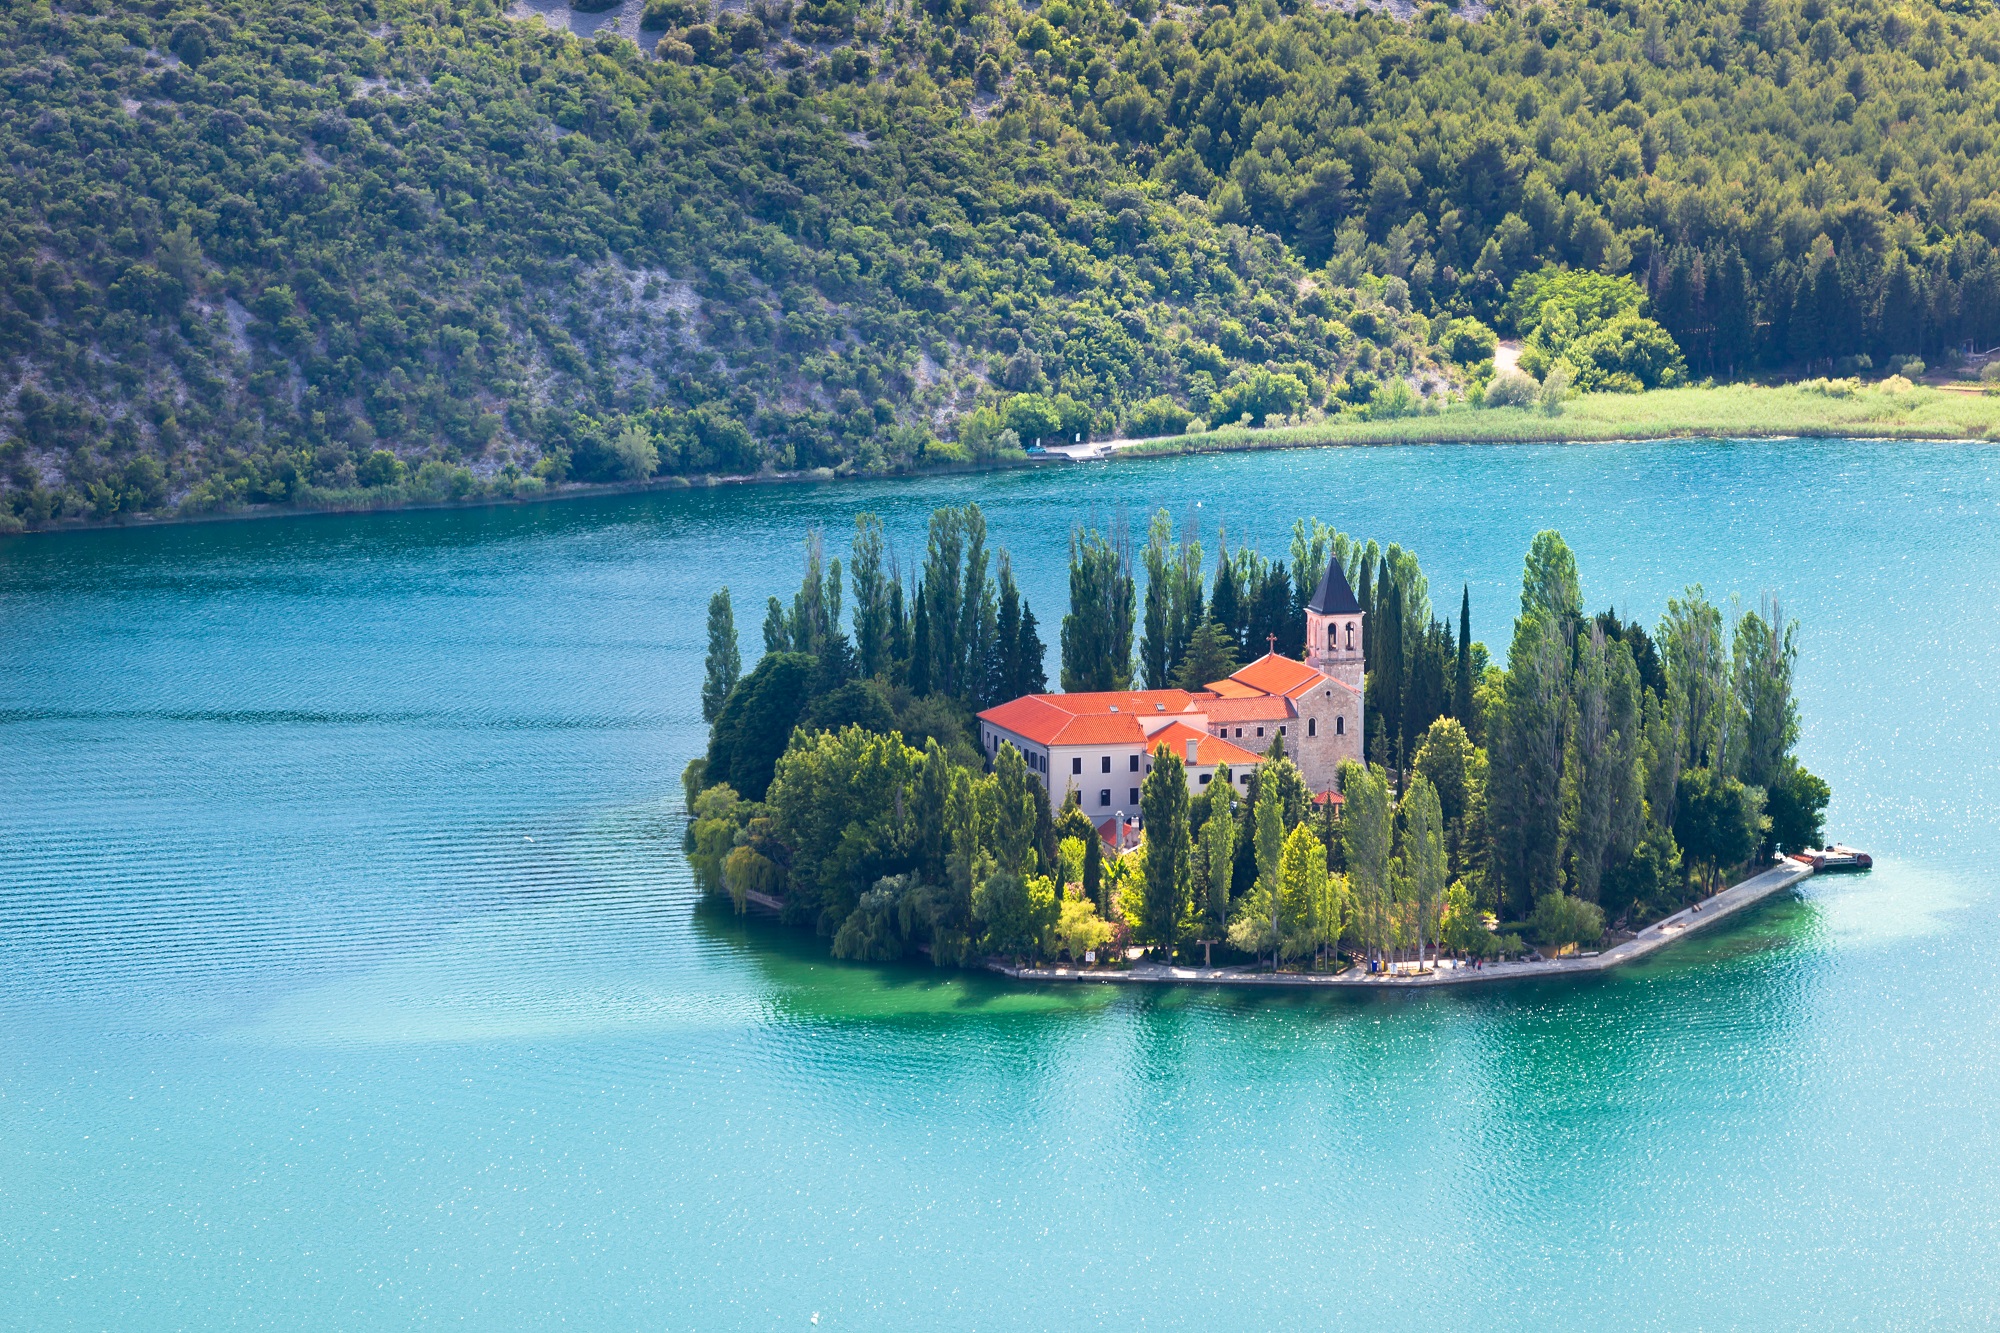 visovac-christian-monastery-on-the-island-in-the-krka-national-park-croatia-aerial-view_shutterstock_460032256